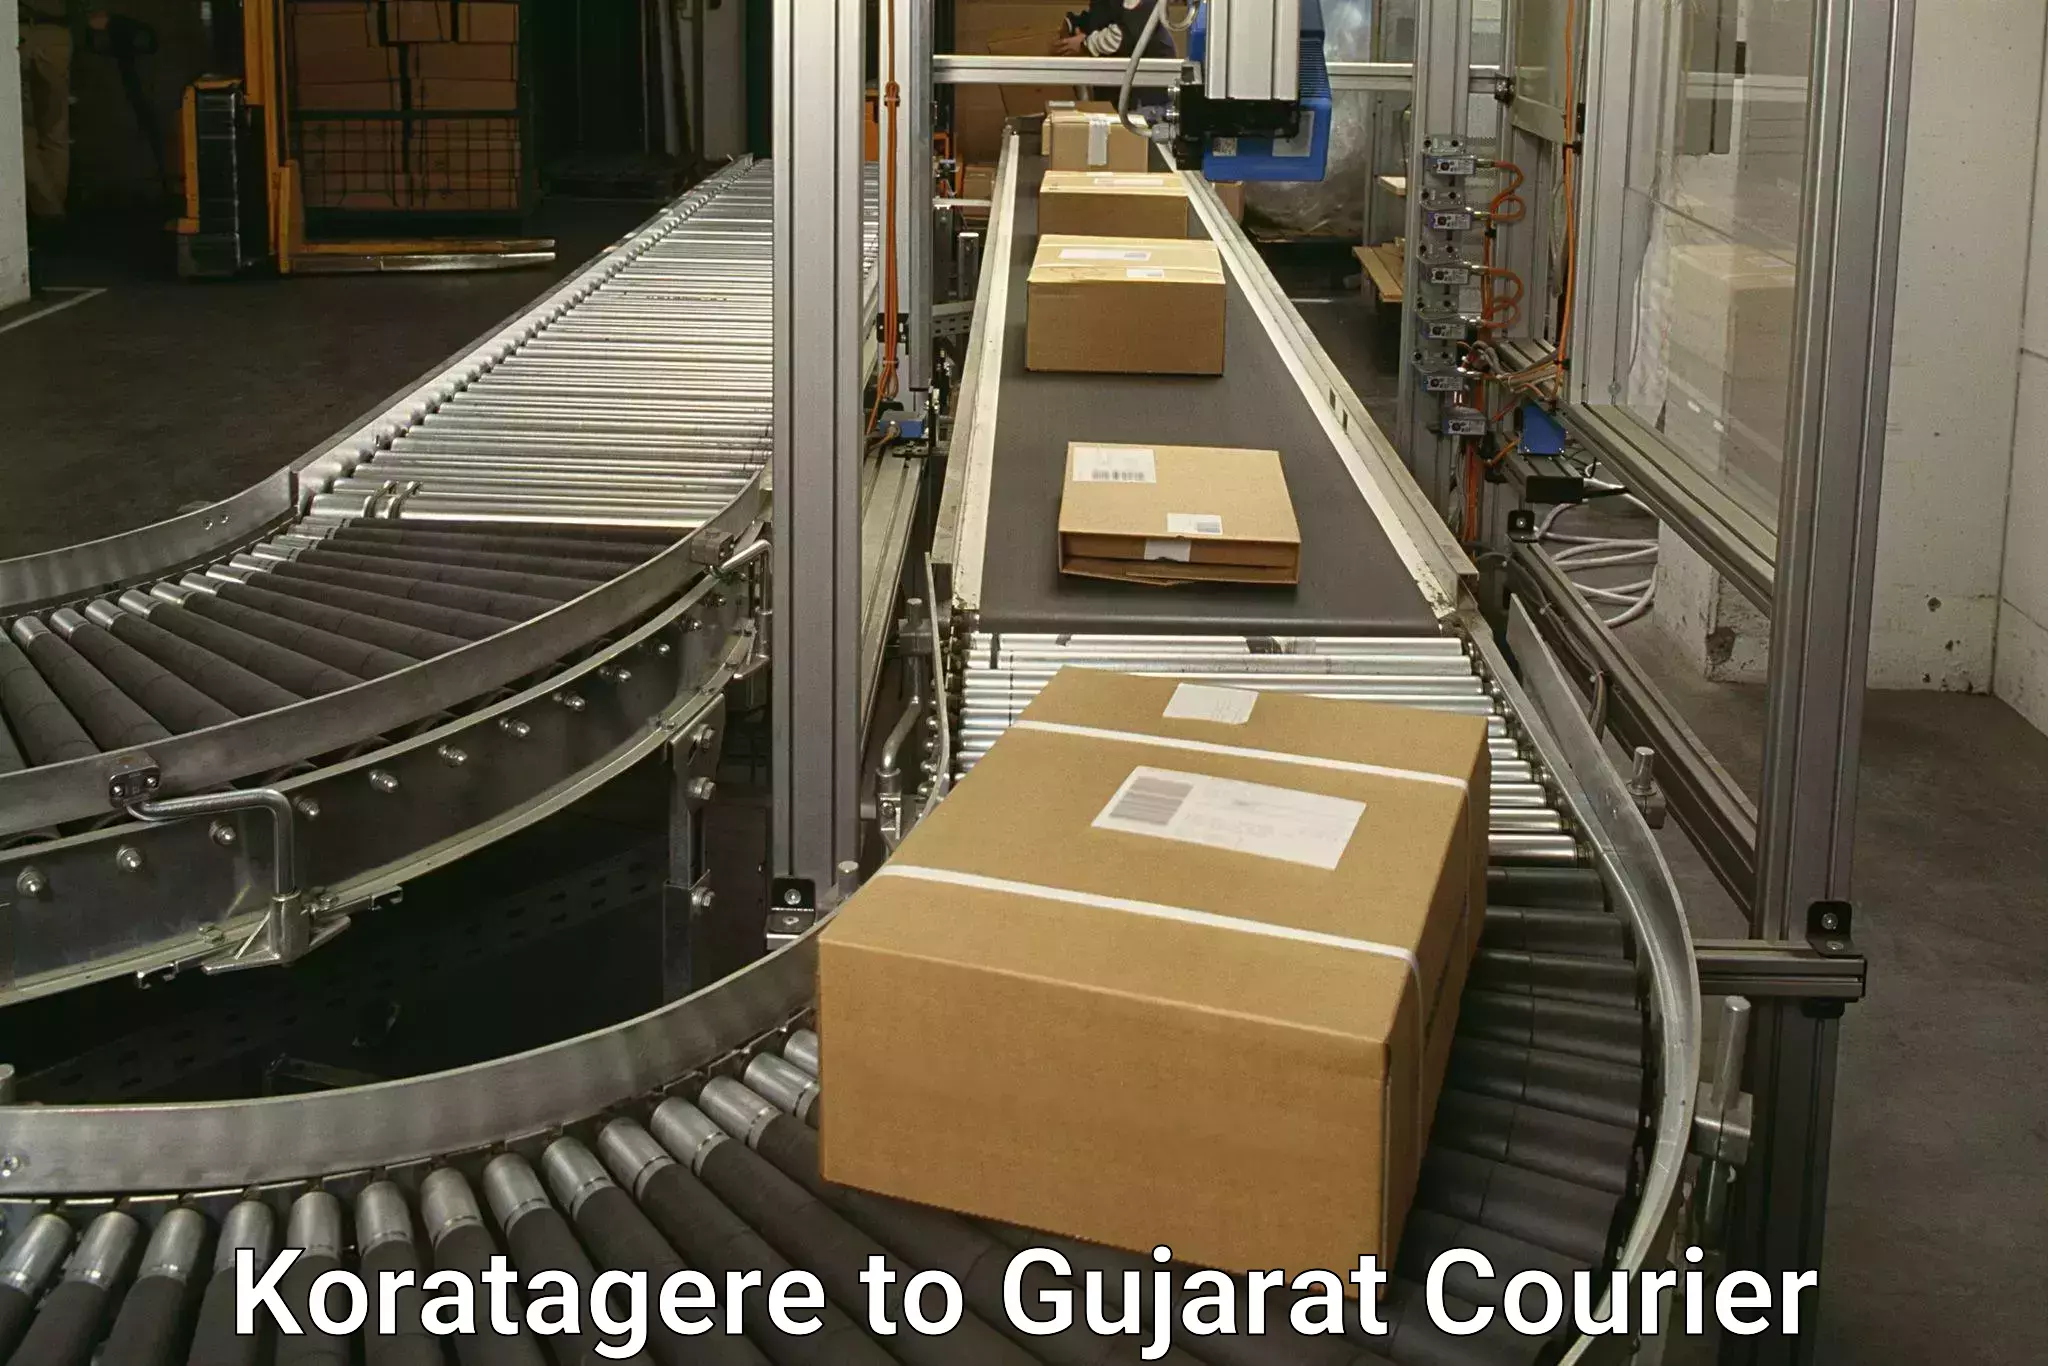 Seamless shipping experience Koratagere to Mundra